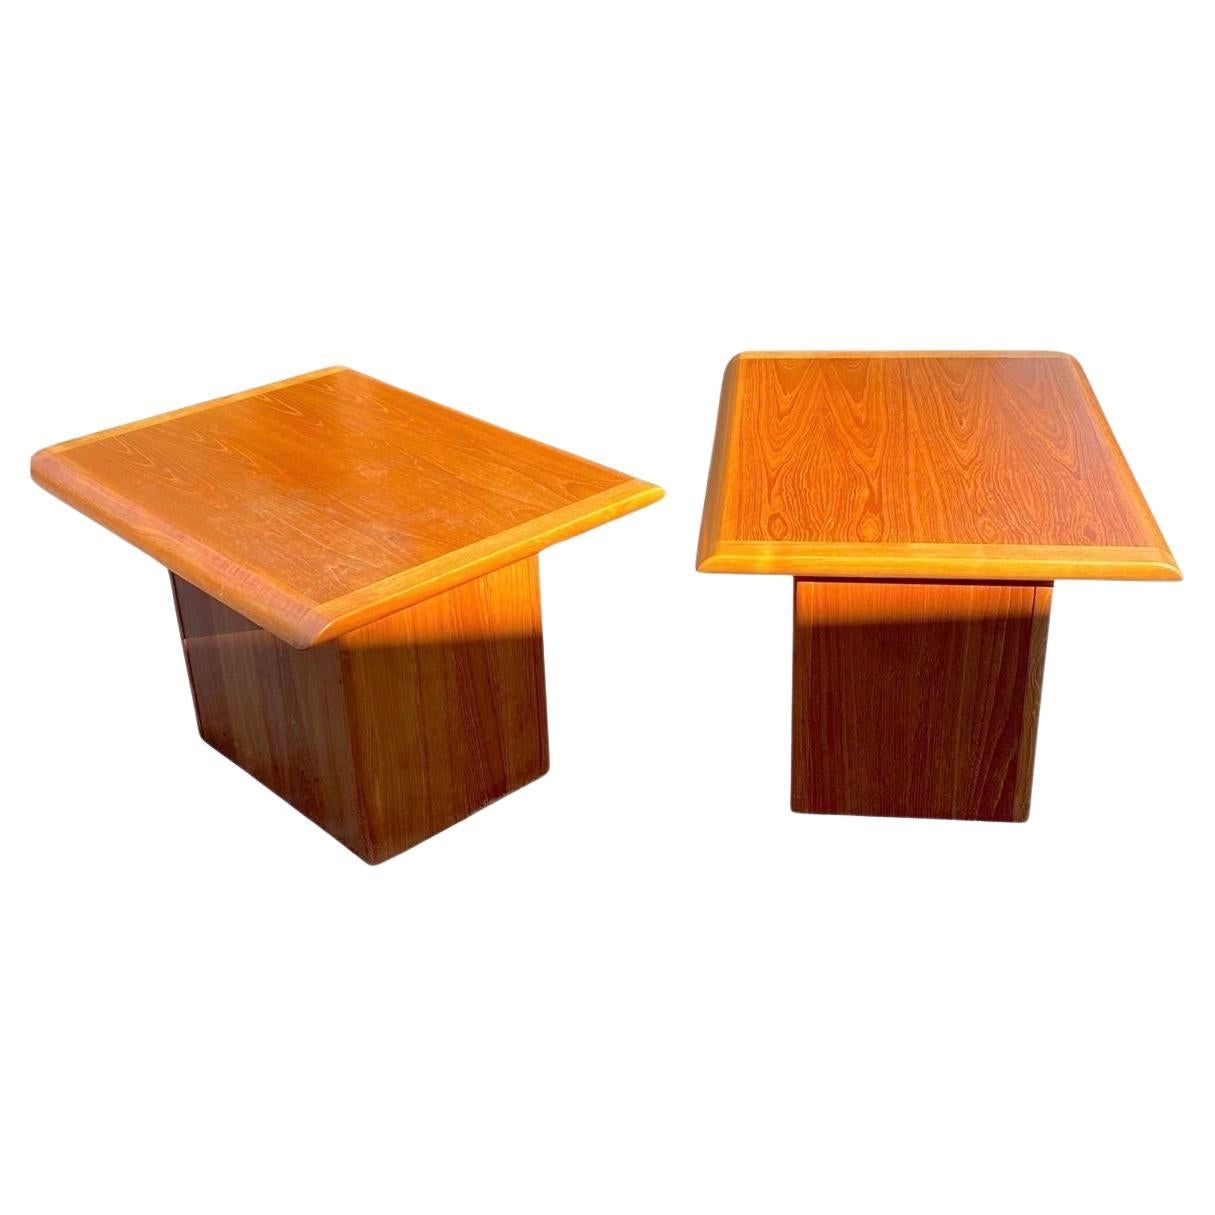 1960’s Danish Modern Pedestal Teak Side Tables, a Pair For Sale